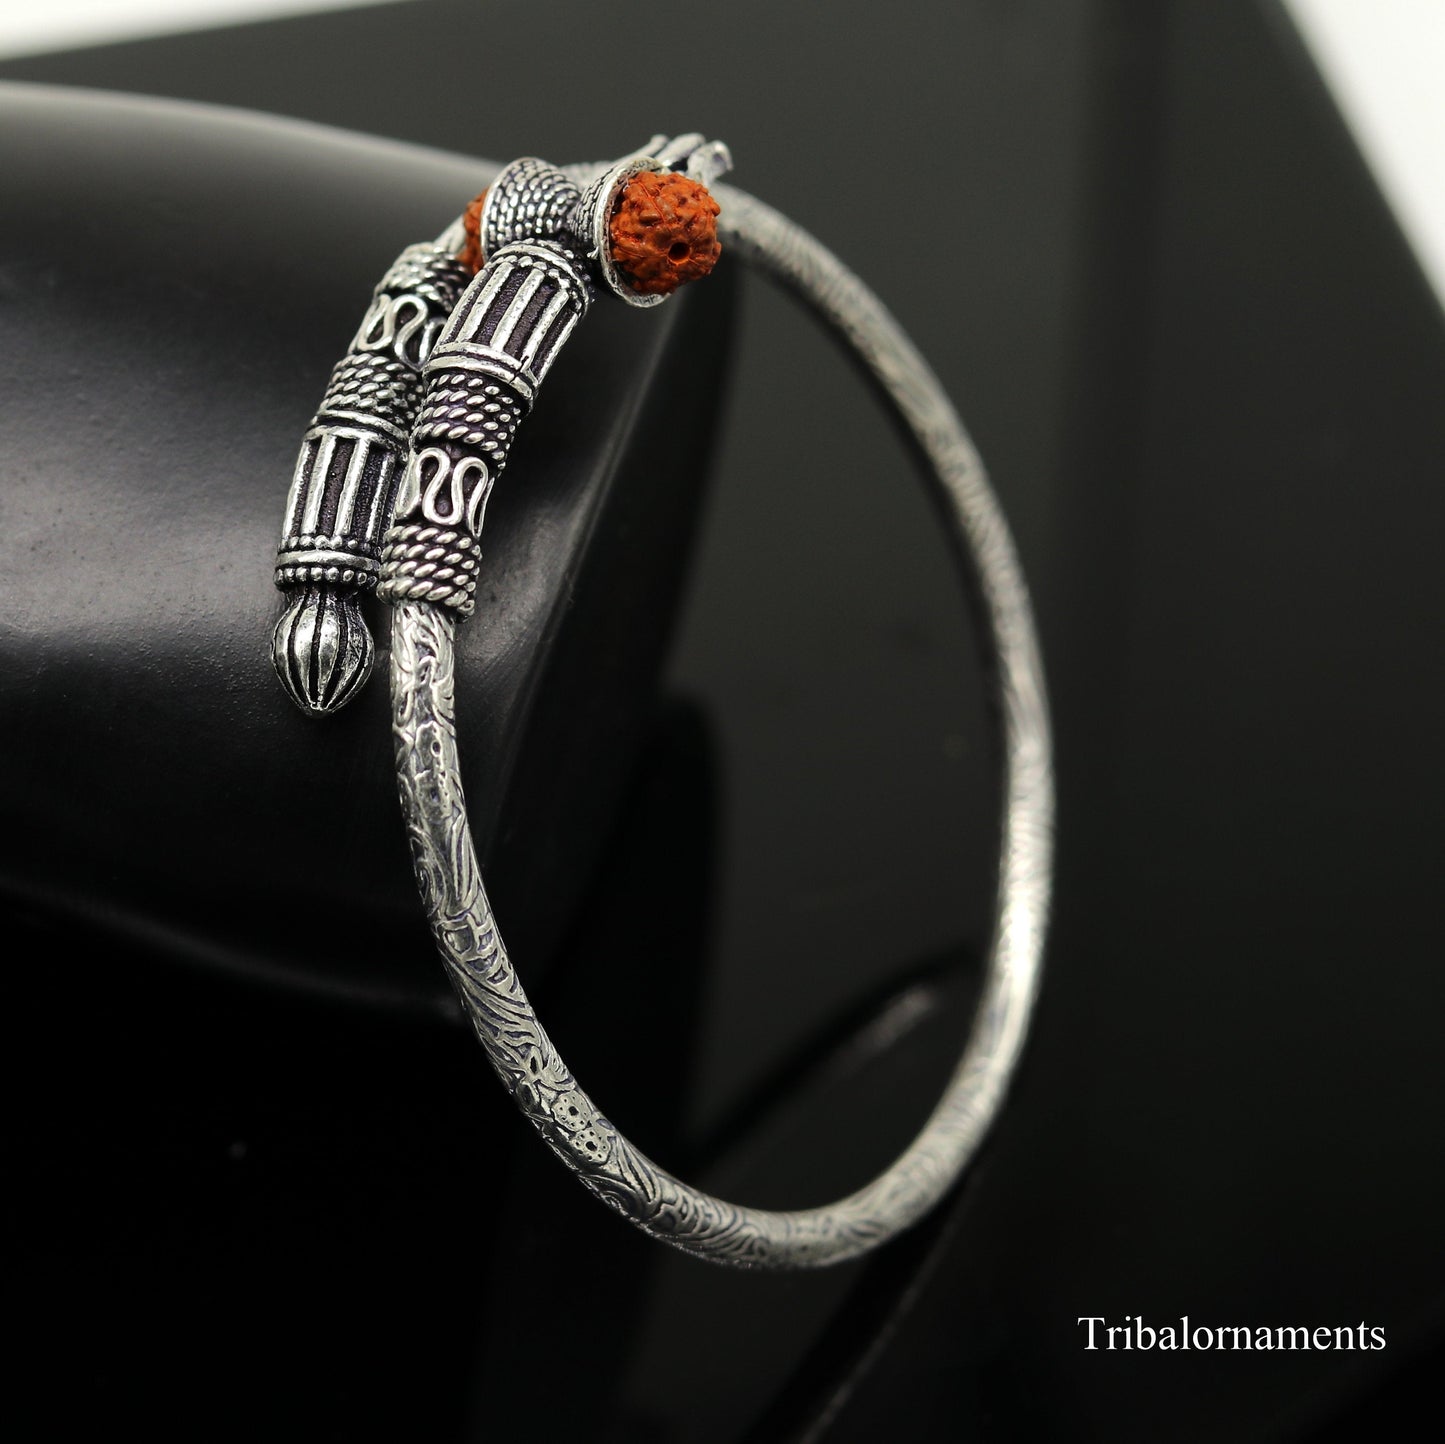 925 sterling silver handmade Lord shiva trident rudraksh bangle bracelet ,fabulous custom made oxidized unisex vintage design jewelry nsk250 - TRIBAL ORNAMENTS